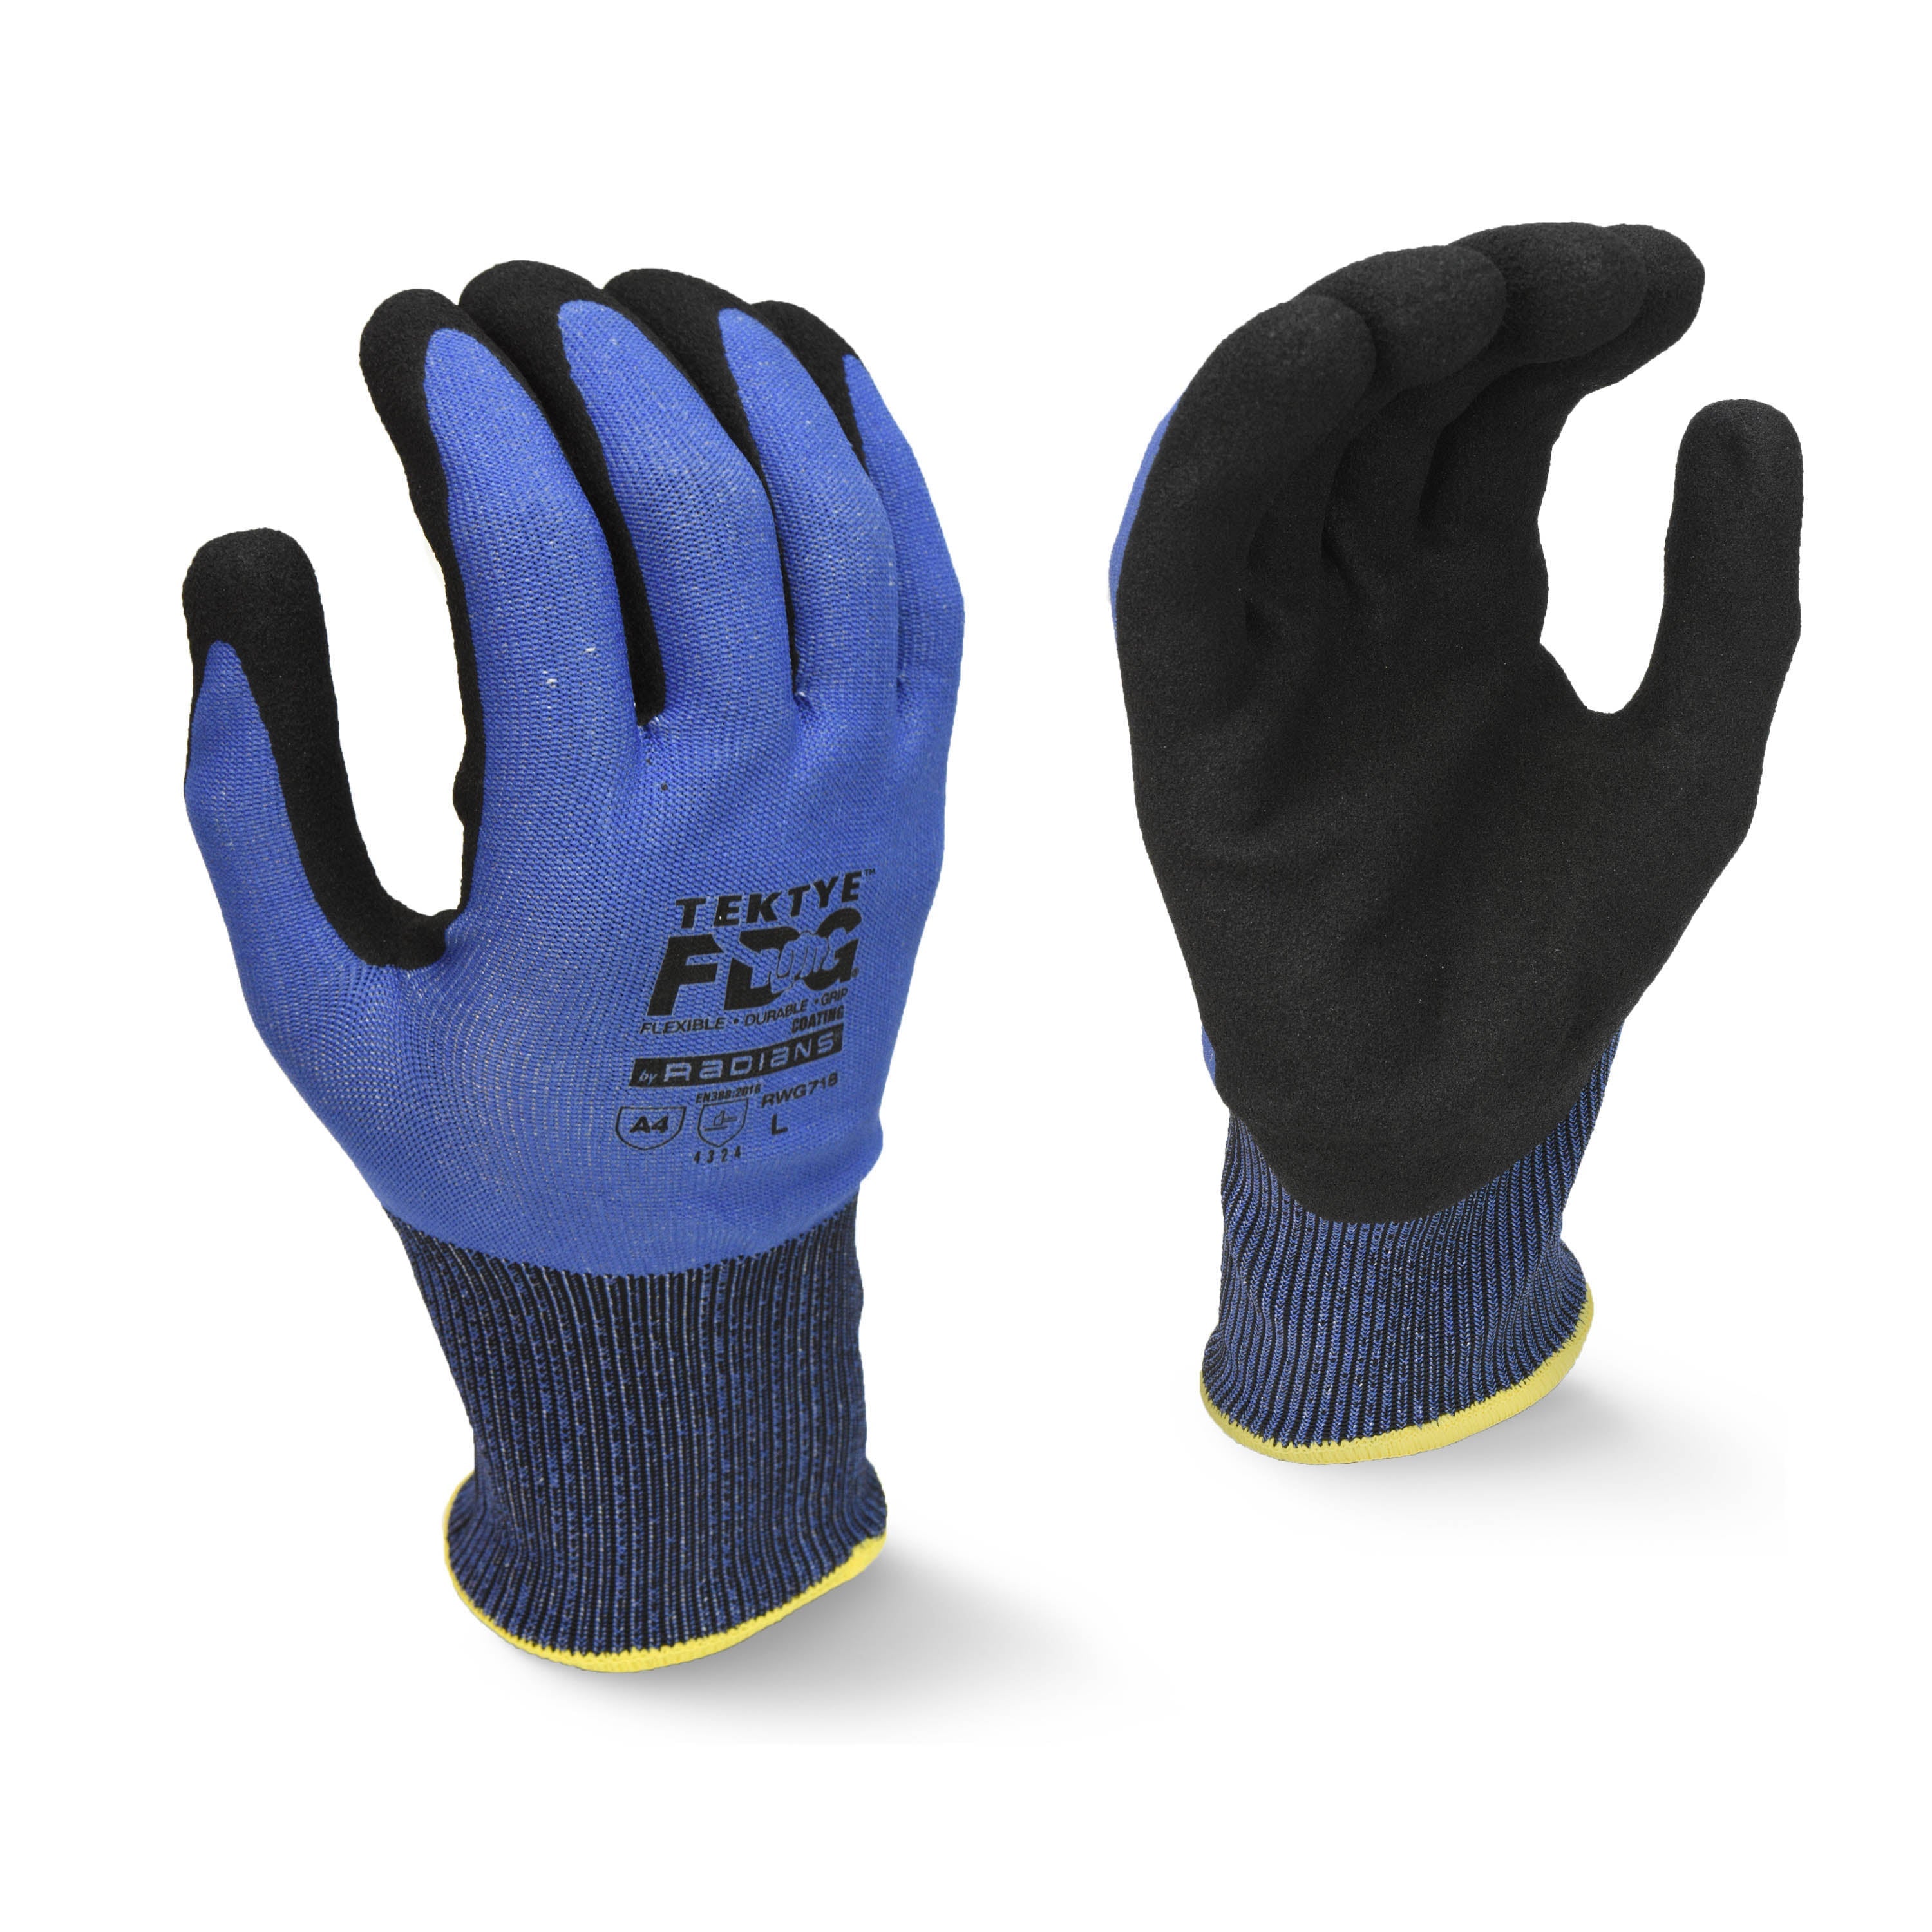 Radians RWG718 TEKTYE FDG Touchscreen A4 Work Glove